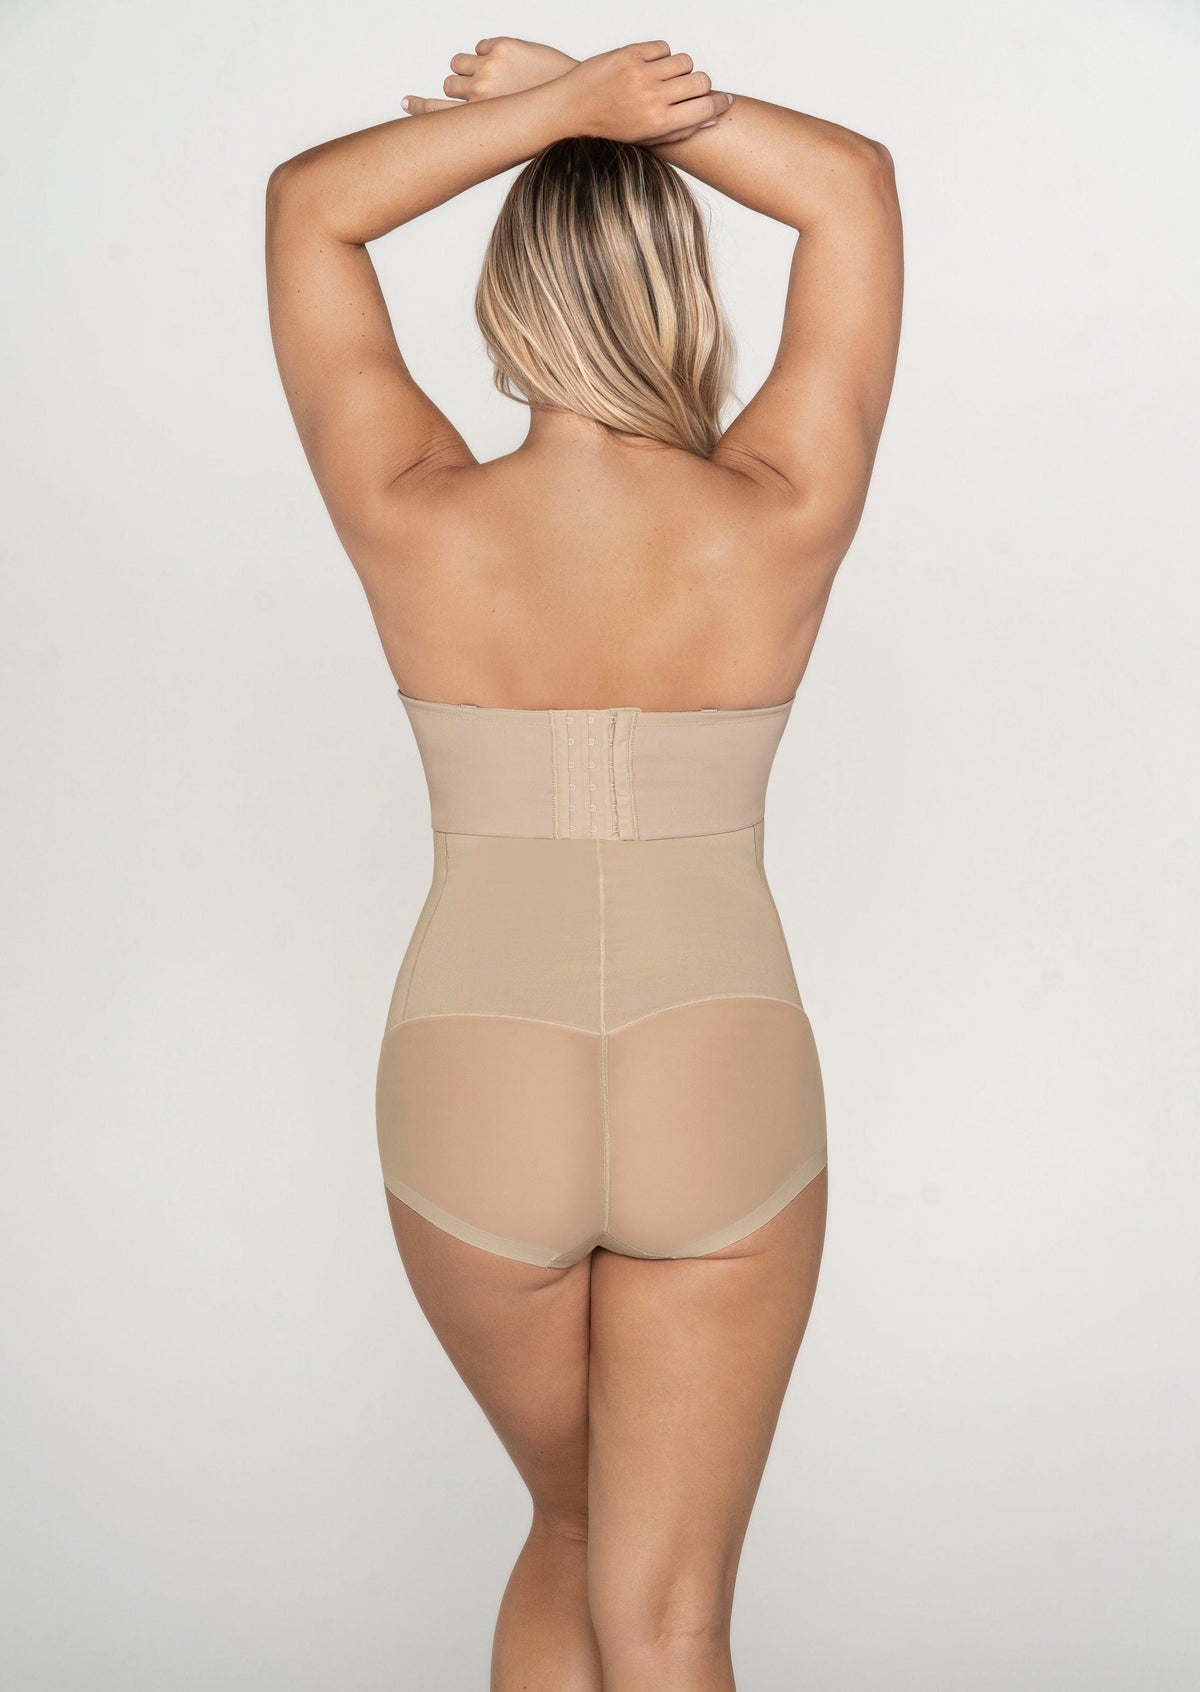 Leonisa Shapewear Nude / M Extra High-Waisted Sheer Bottom Sculpting Shaper Panty - Nude